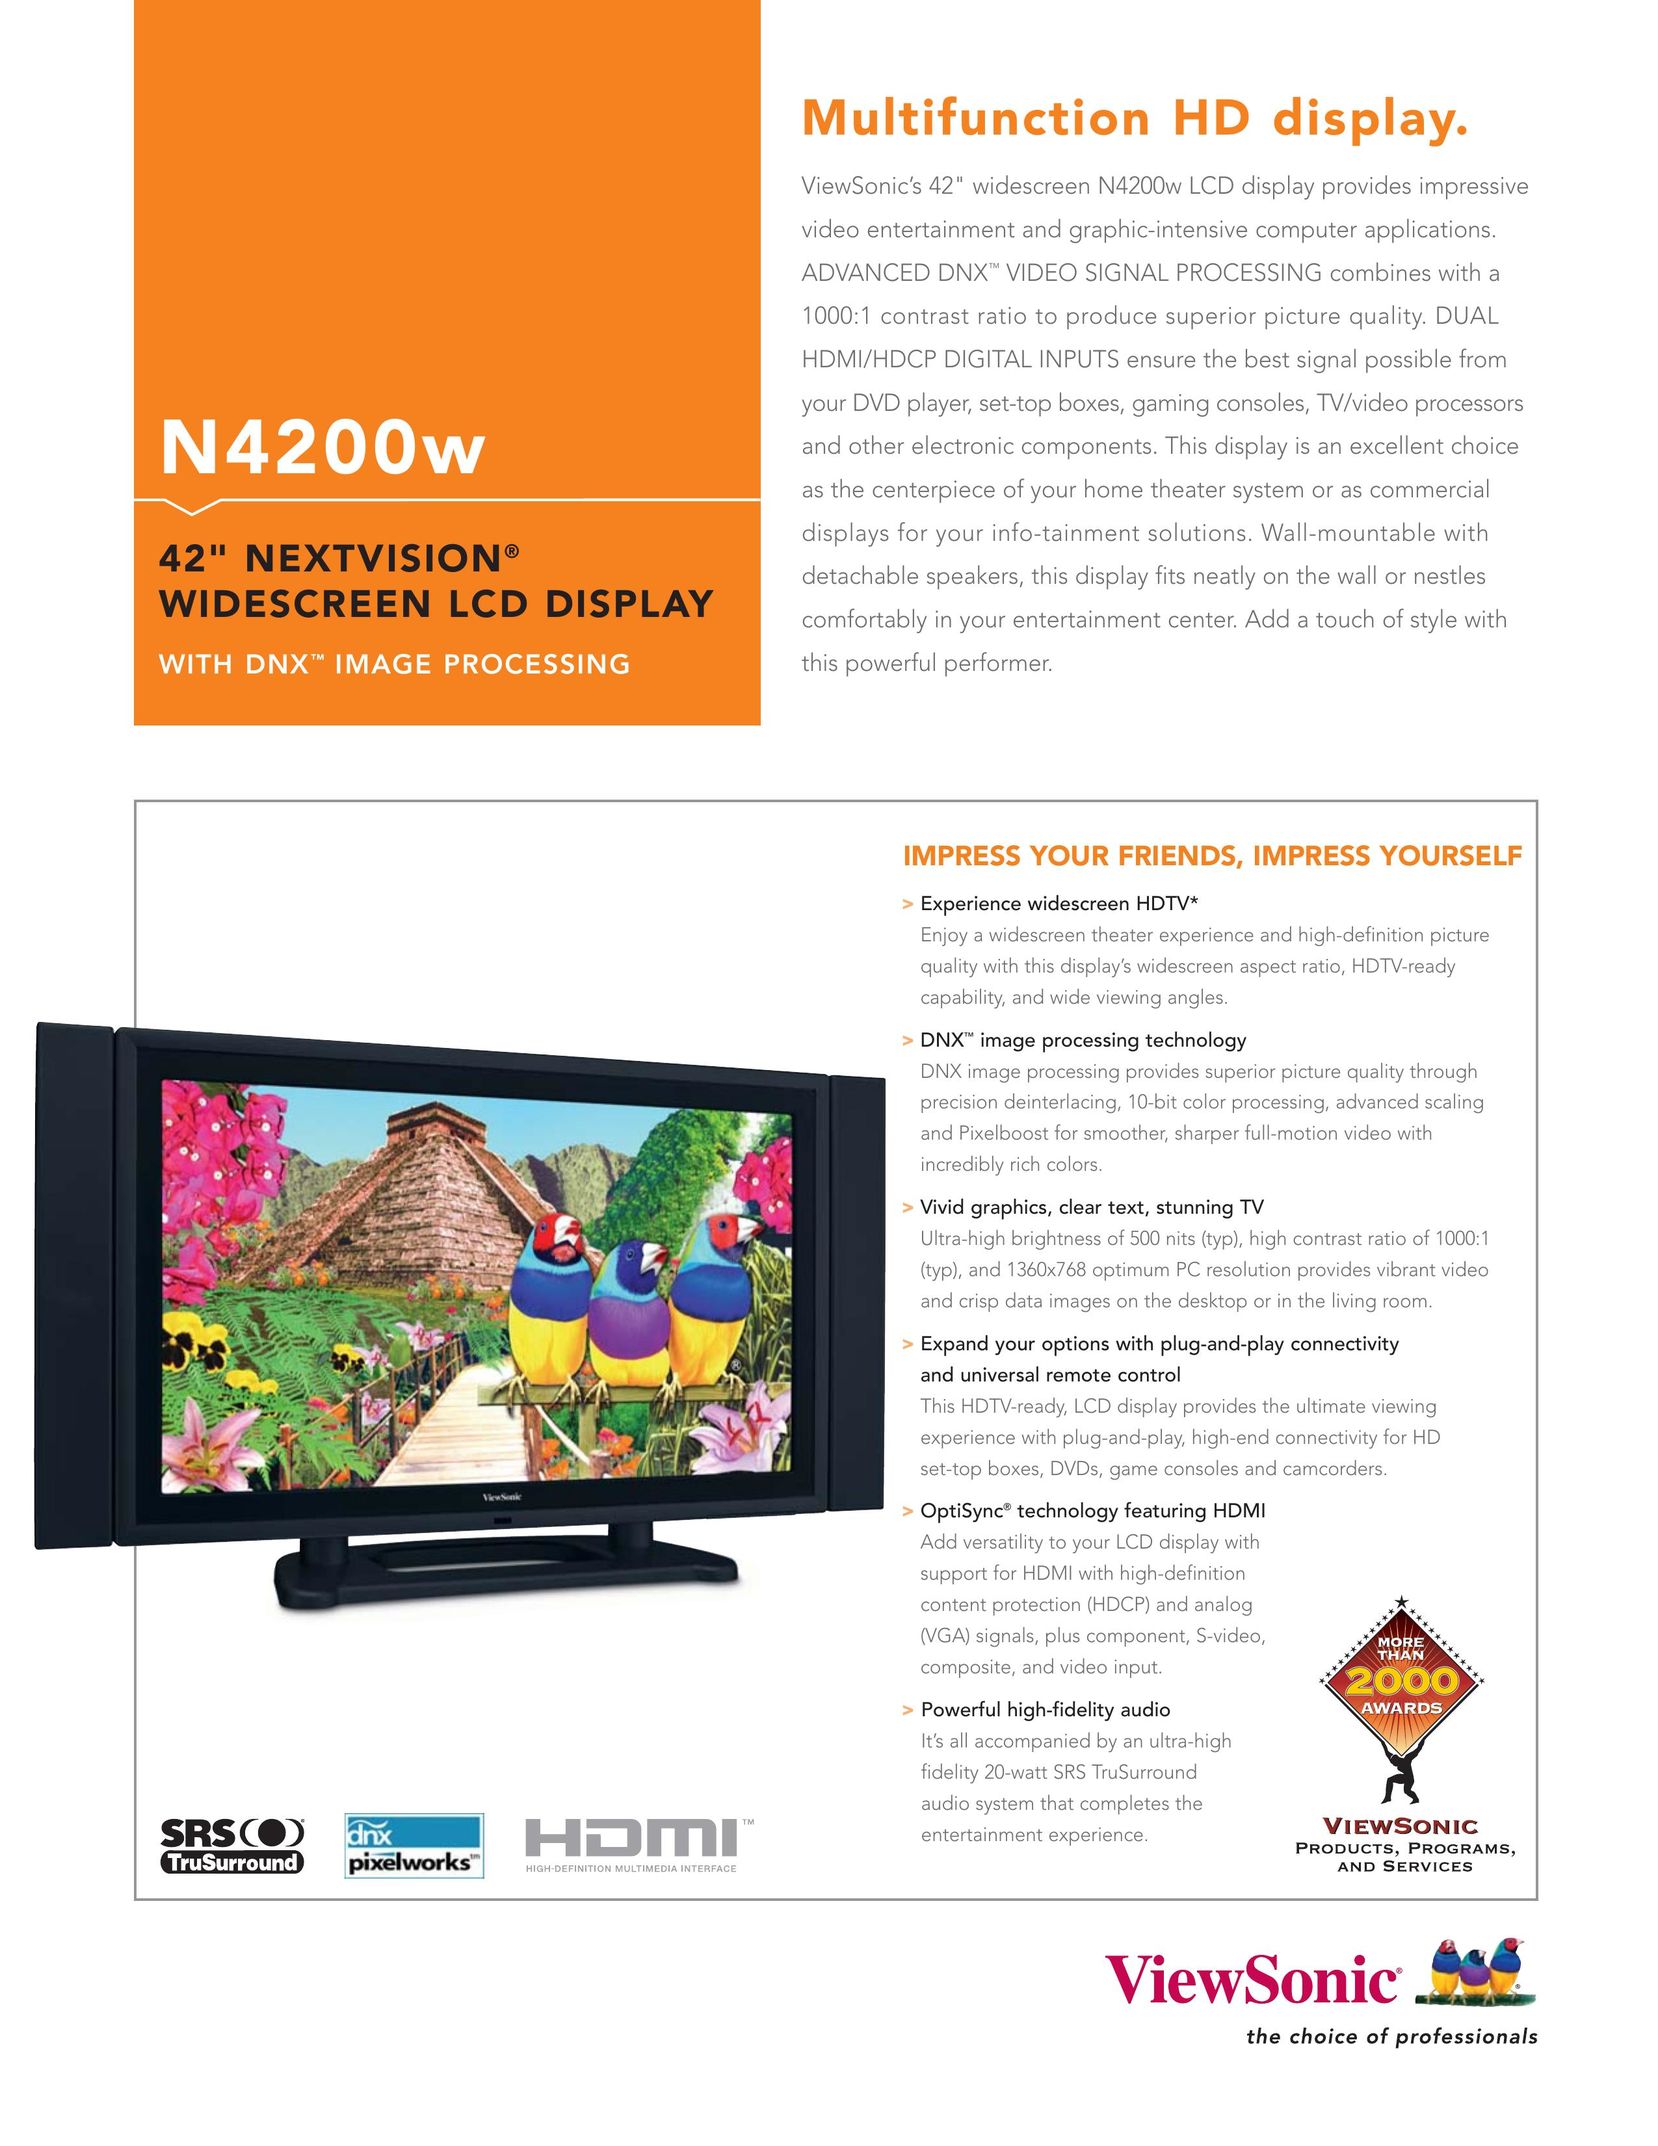 ViewSonic N4200w 42 Flat Panel Television User Manual